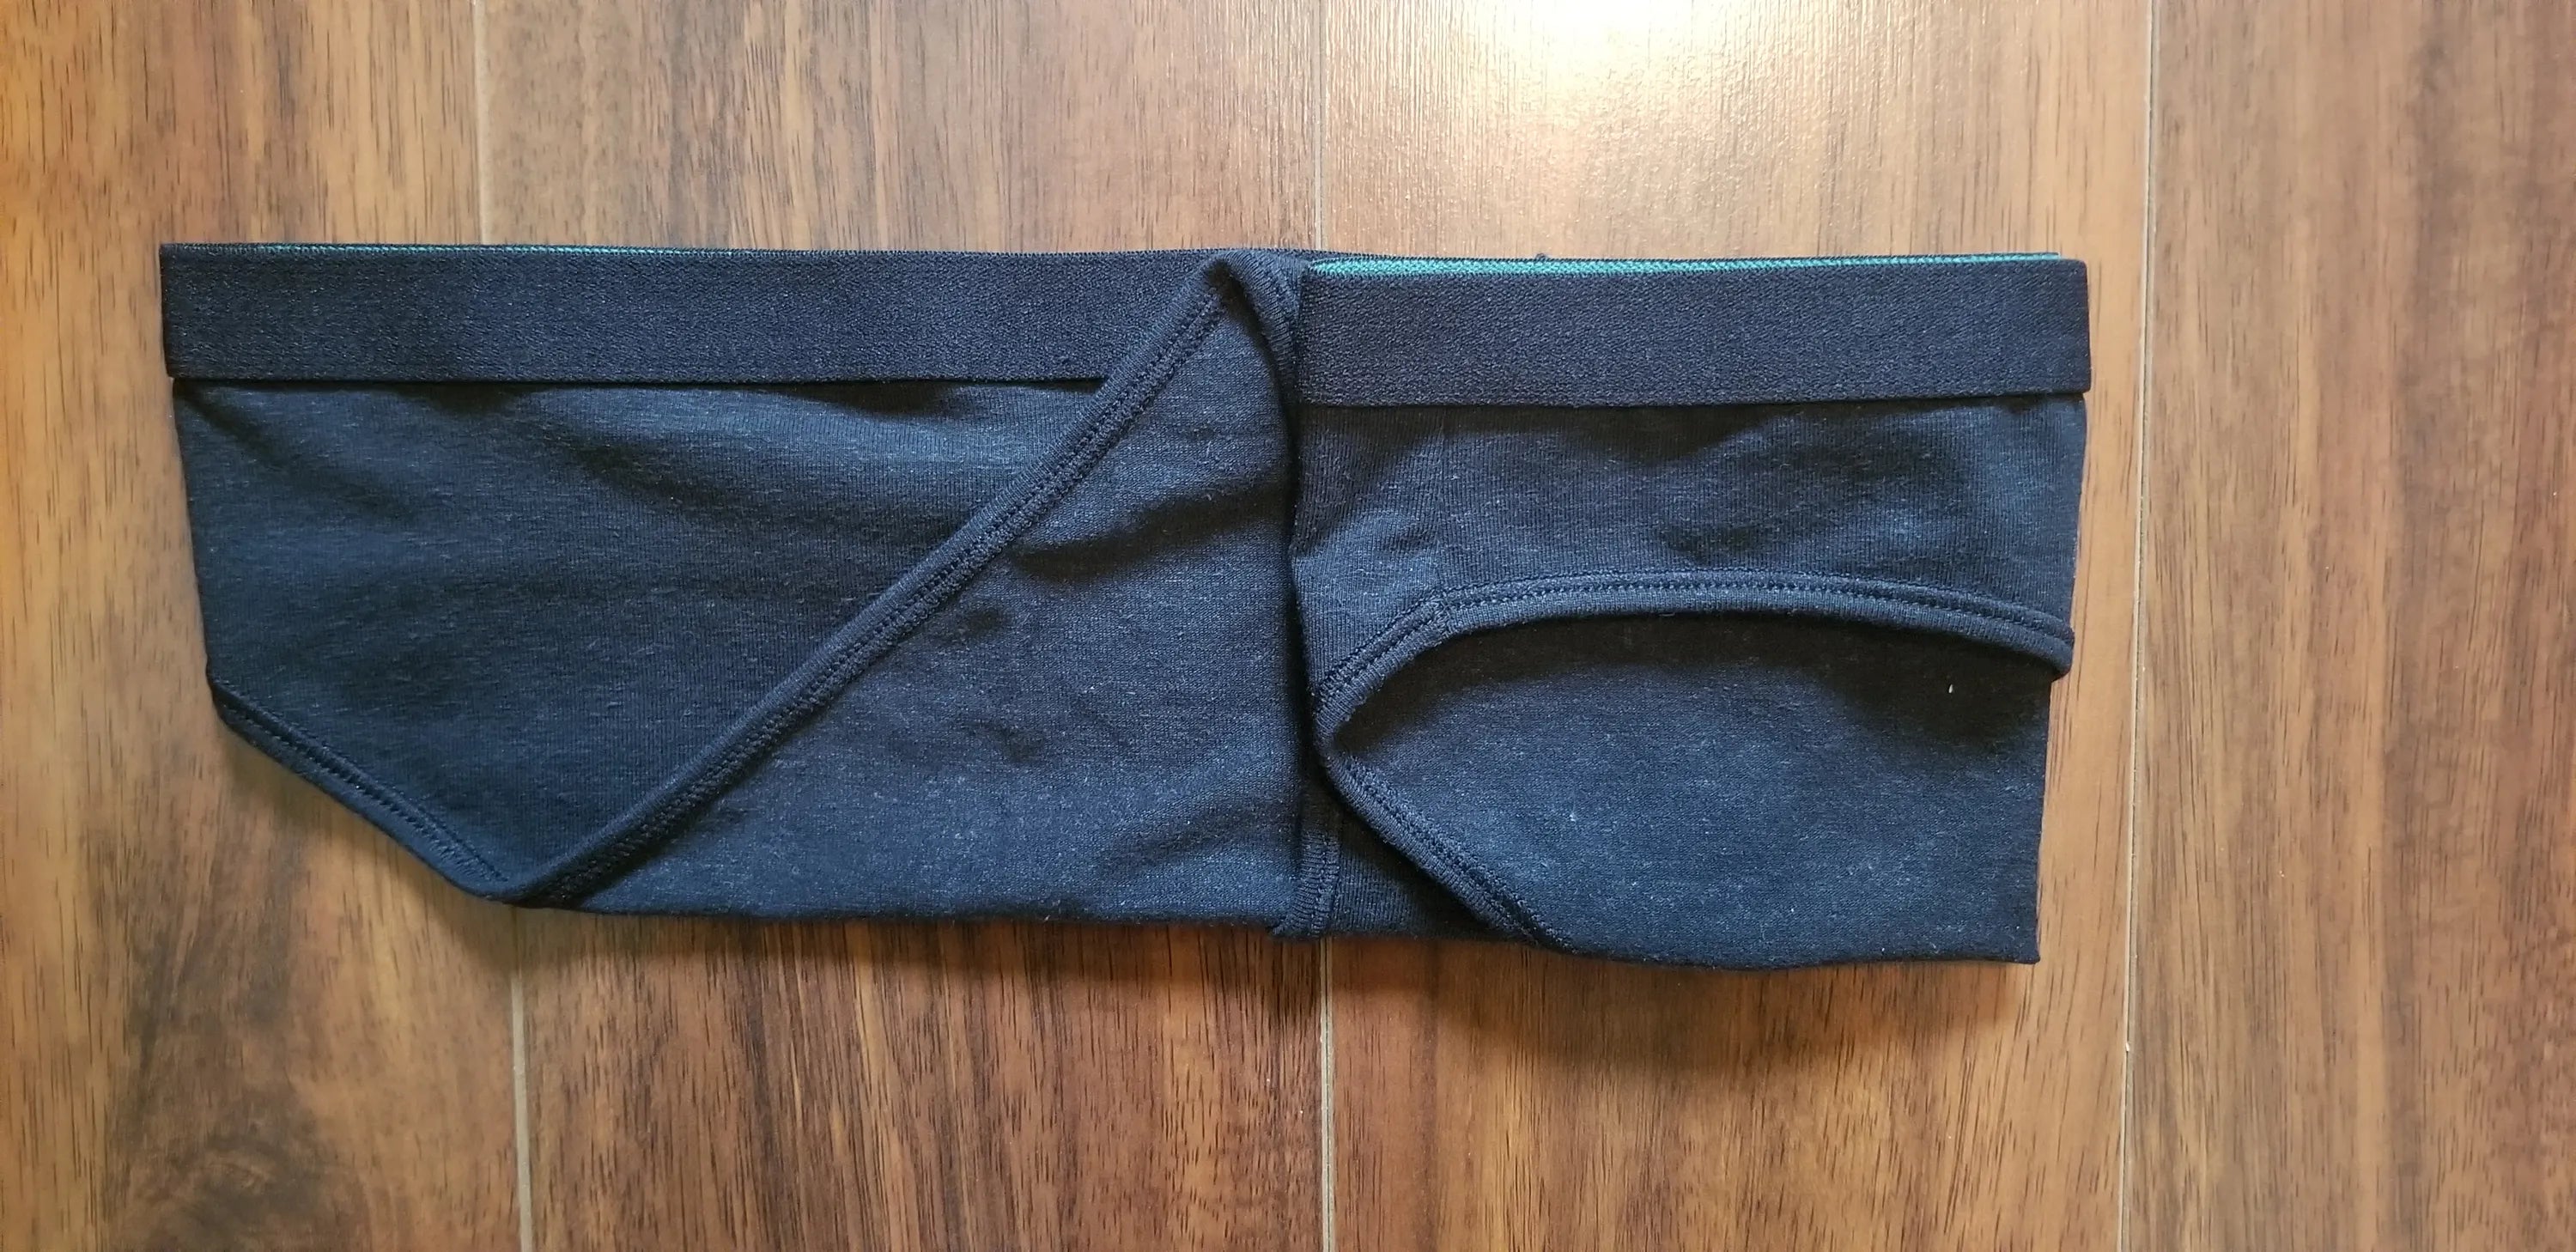 How To Fold Underwear For Travel – WAMA Underwear